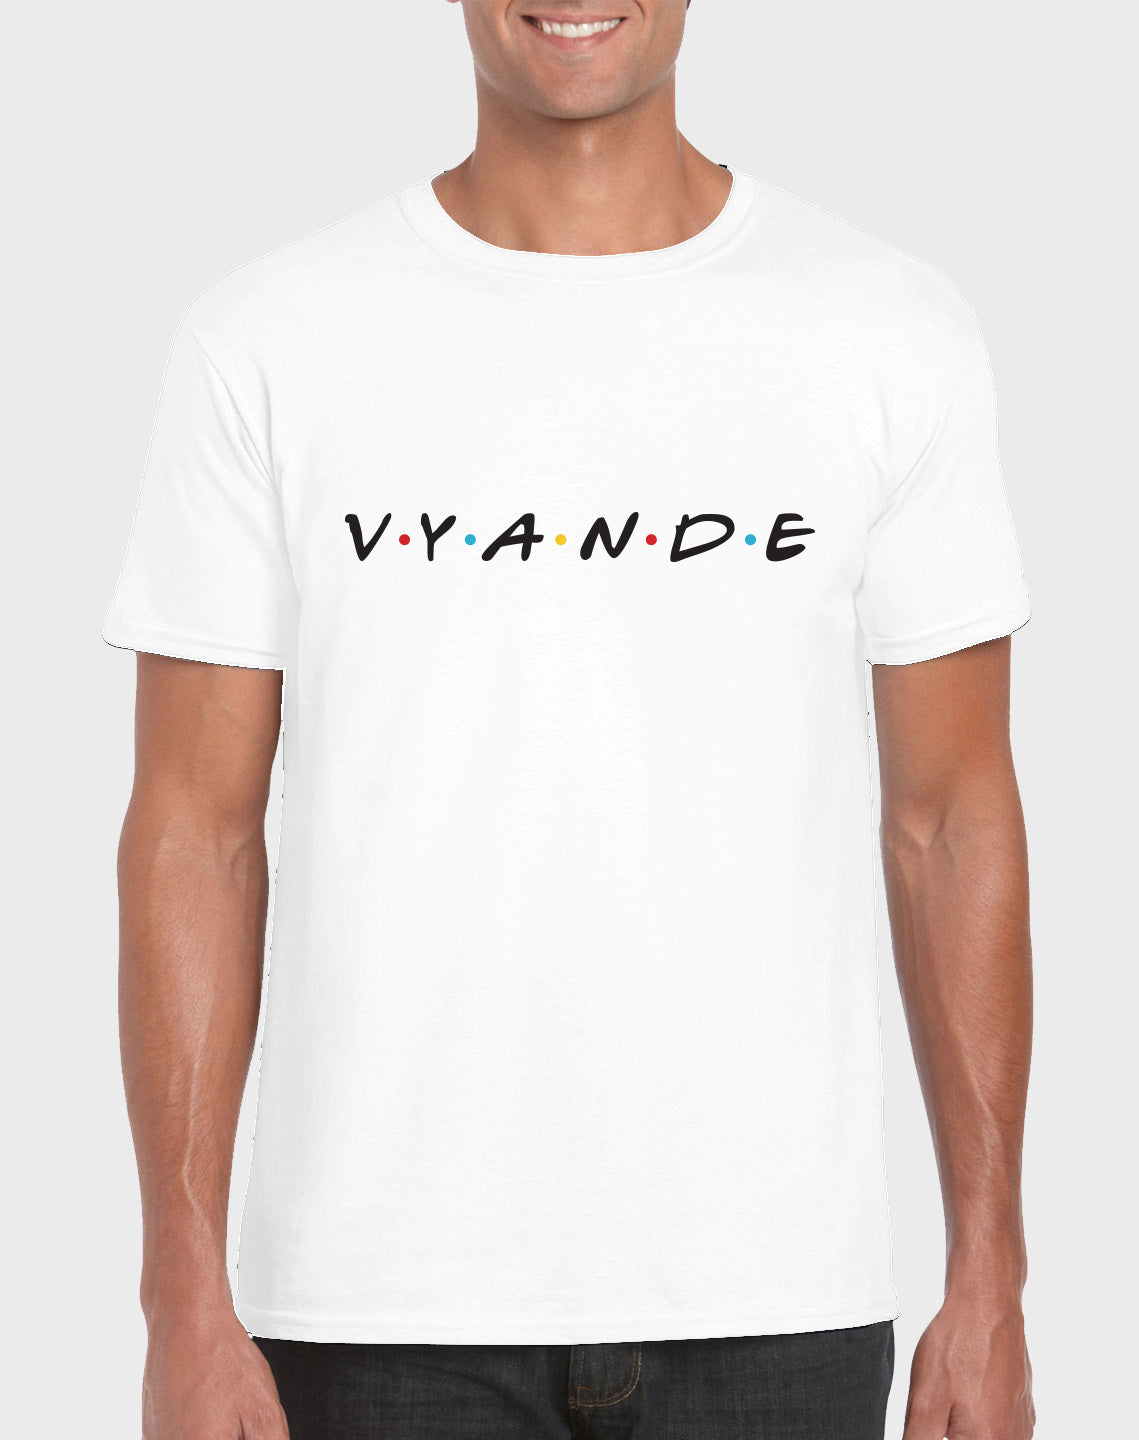 Idees Vol Vrees® Vyande Men's T-shirt